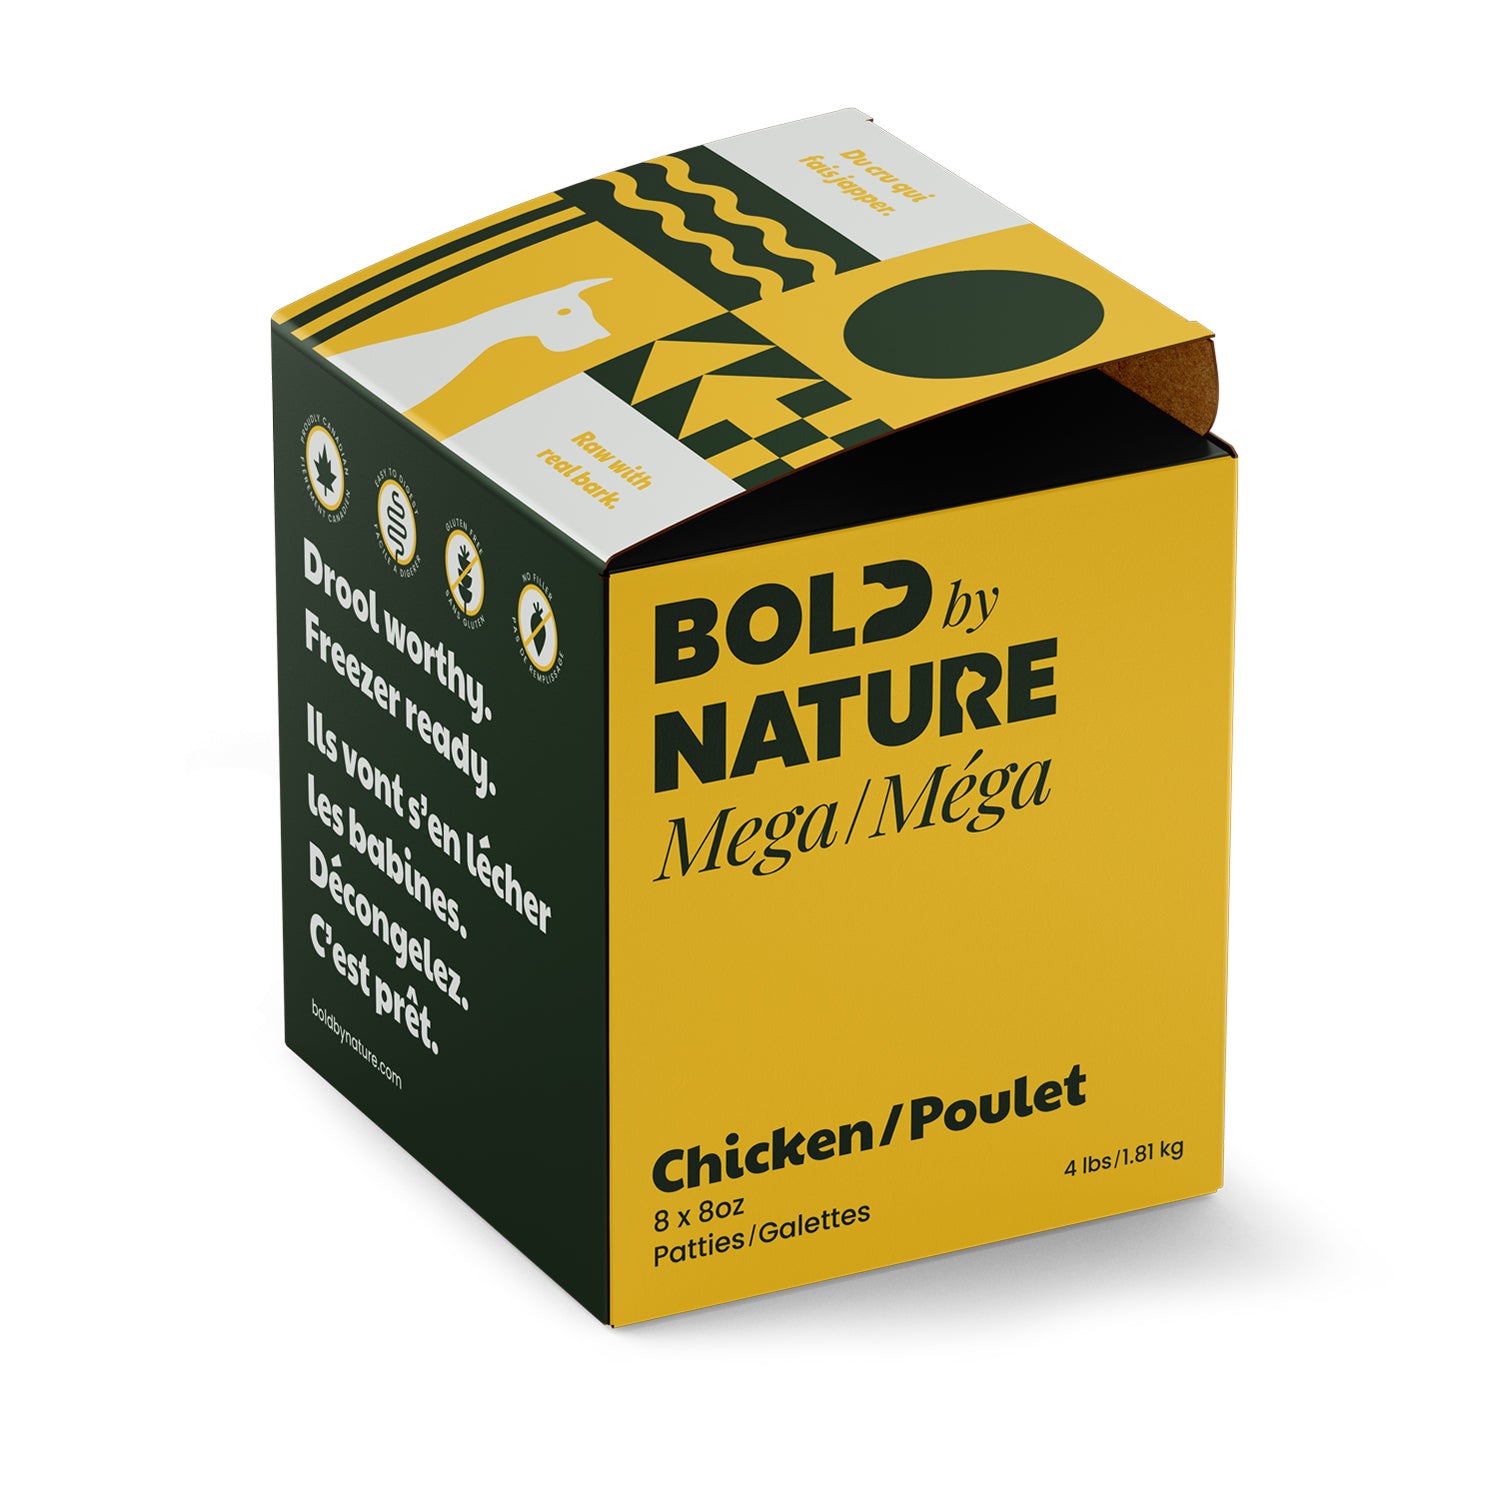 Bold by Nature - Mega Frozen Raw Chicken Patties Dog Food (4lb) - Small Yellow Box